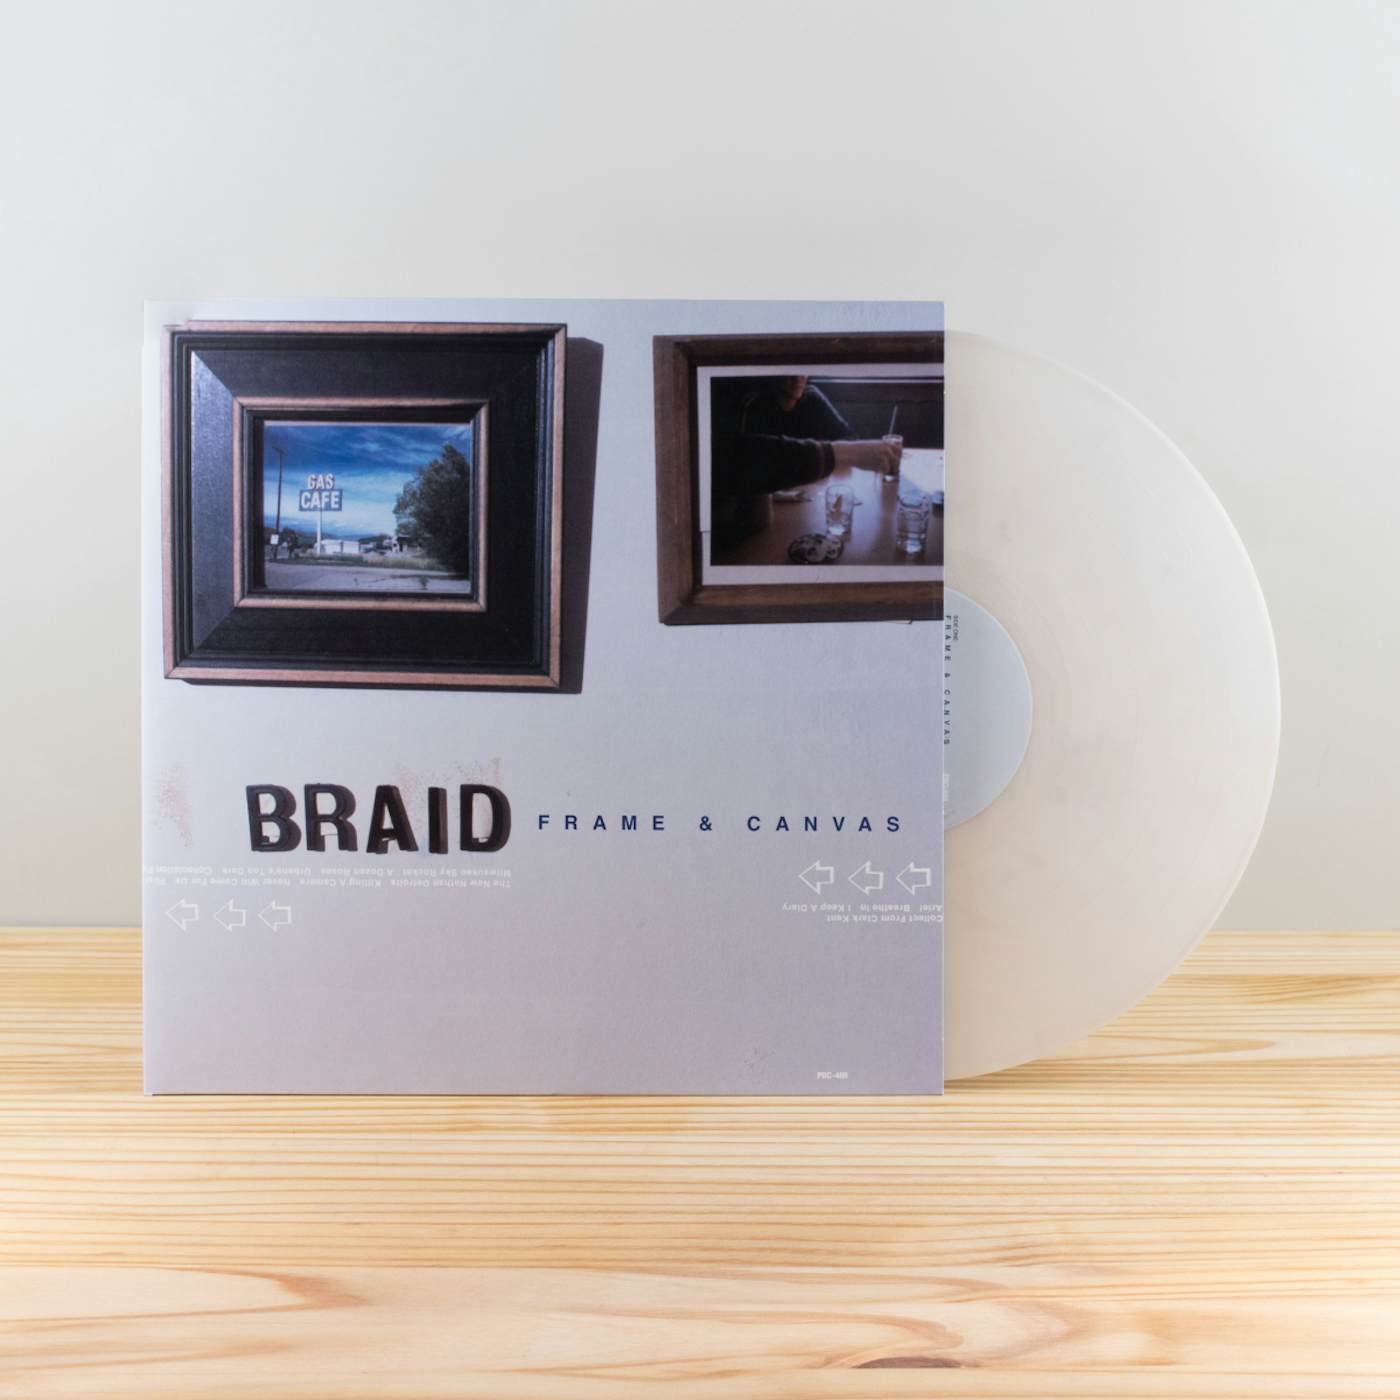 Braid Frame & Canvas (25th Anniversary Edition)